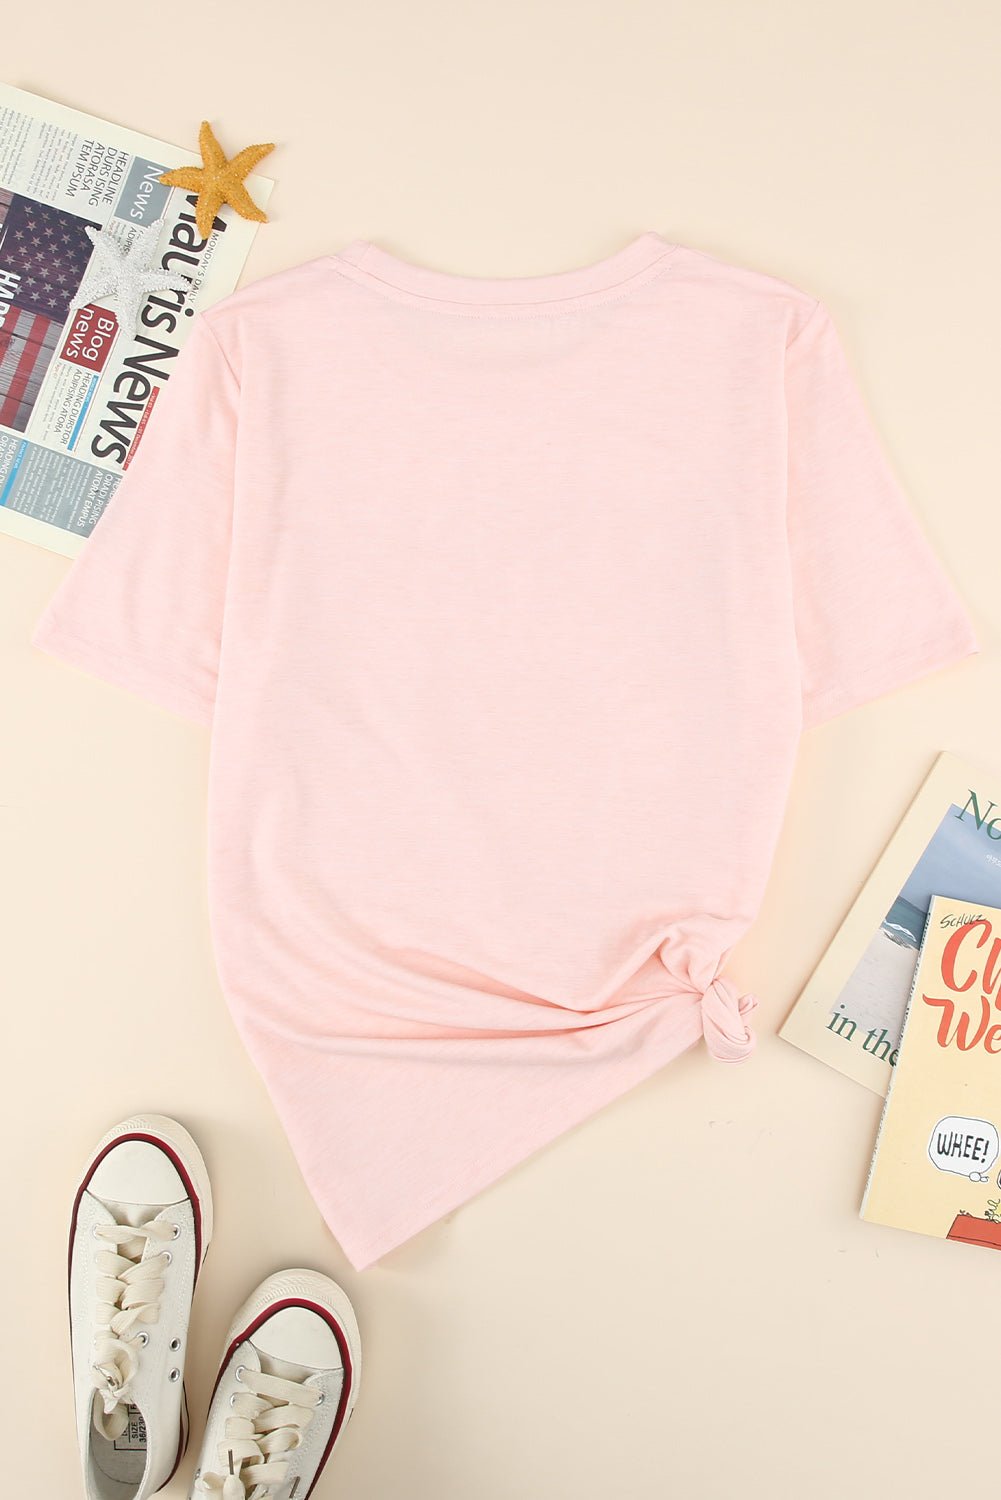 SUNNY DAYS AHEAD Tee Shirt - Fashion Girl Online Store